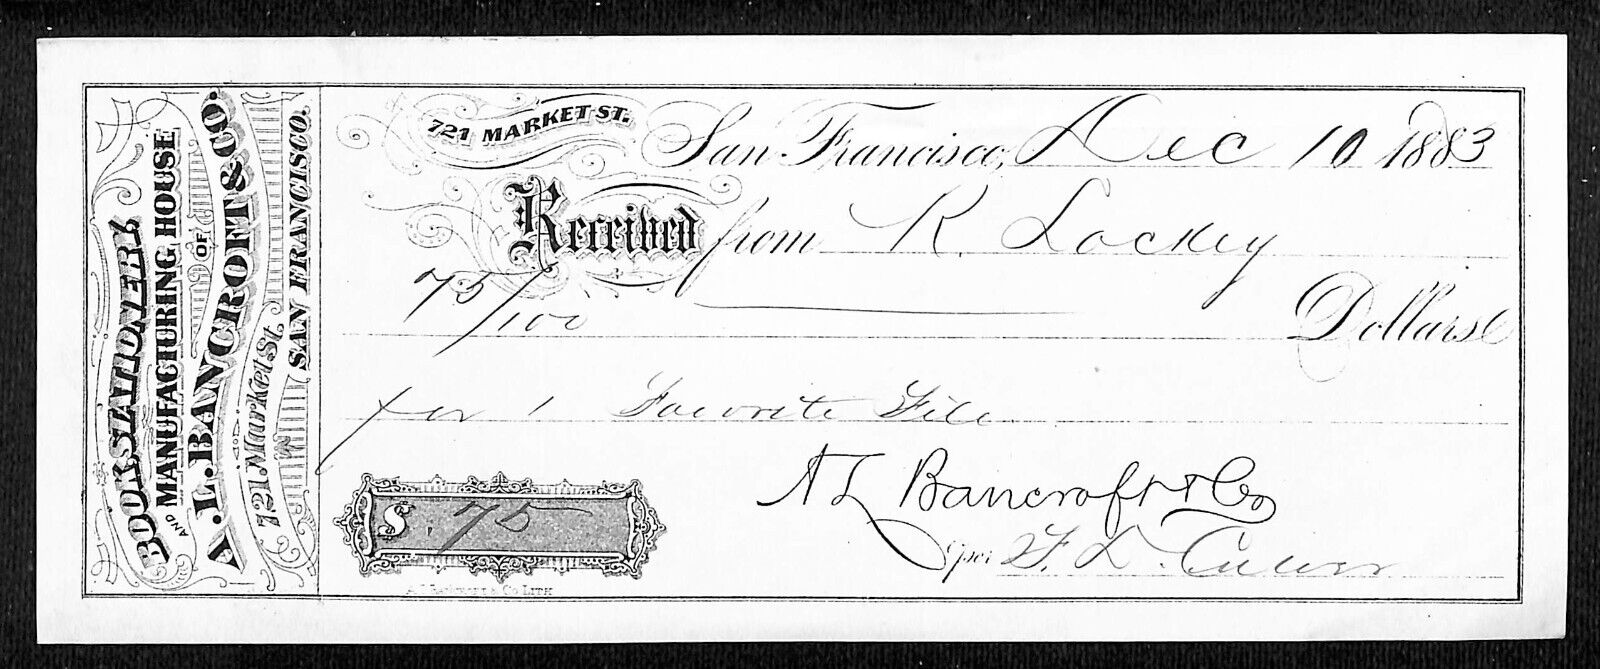 A.L. Bancroft & Co. Books Stationary Publisher San Francisco 1883 Receipt Check 